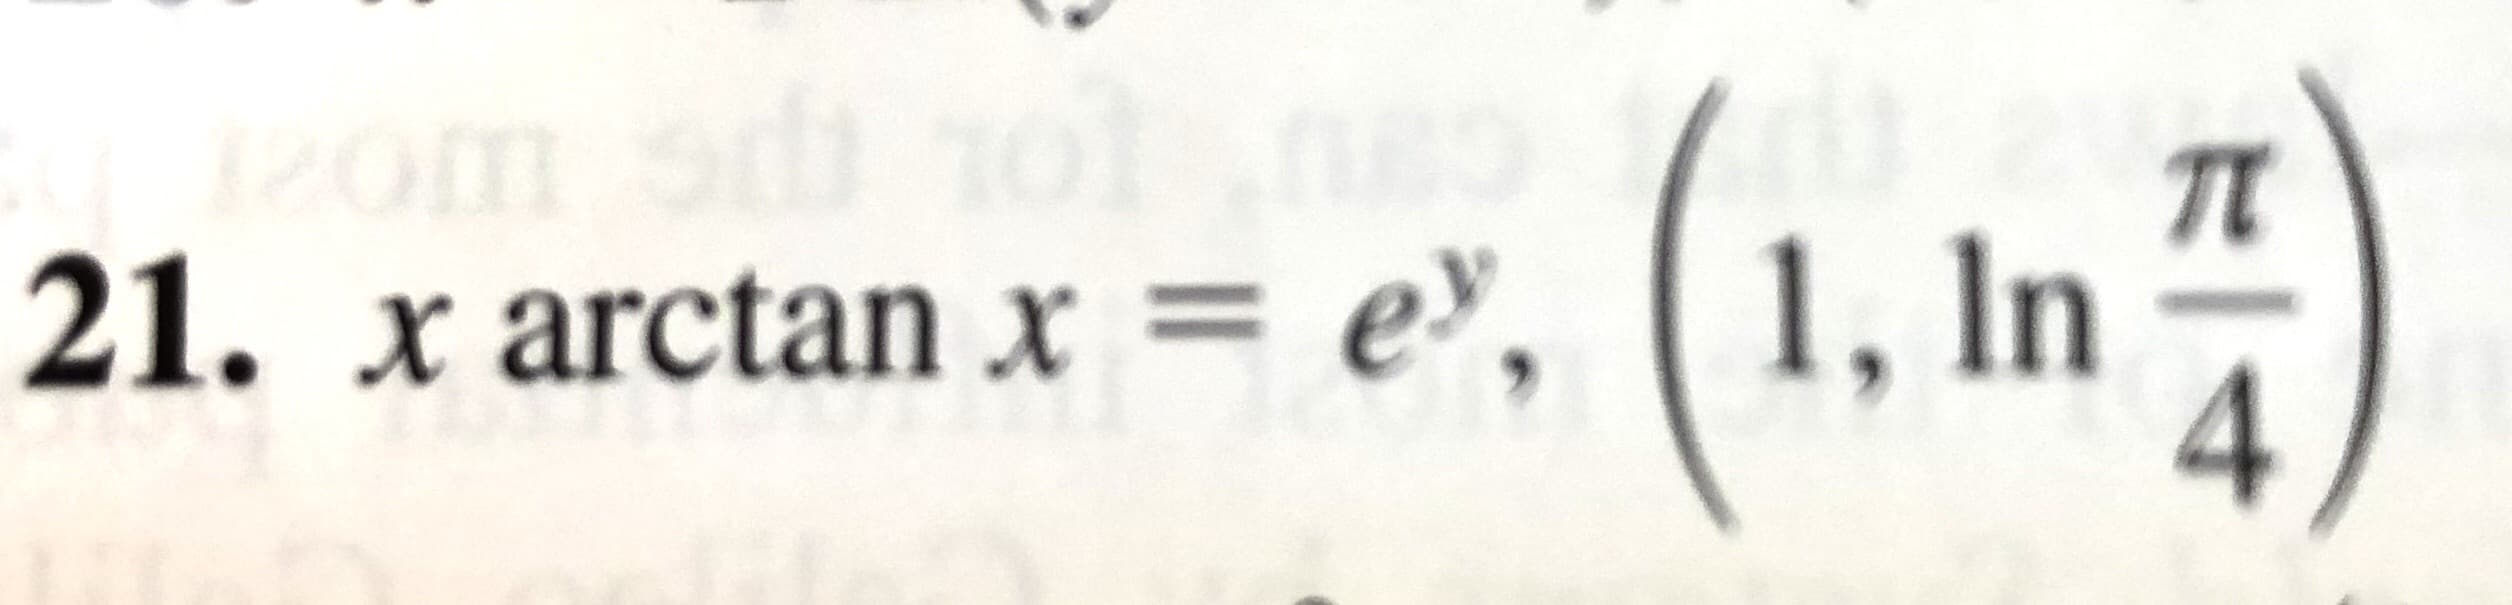 om sdi 1ot
1. x arctan x = e', [ 1, In
프4
